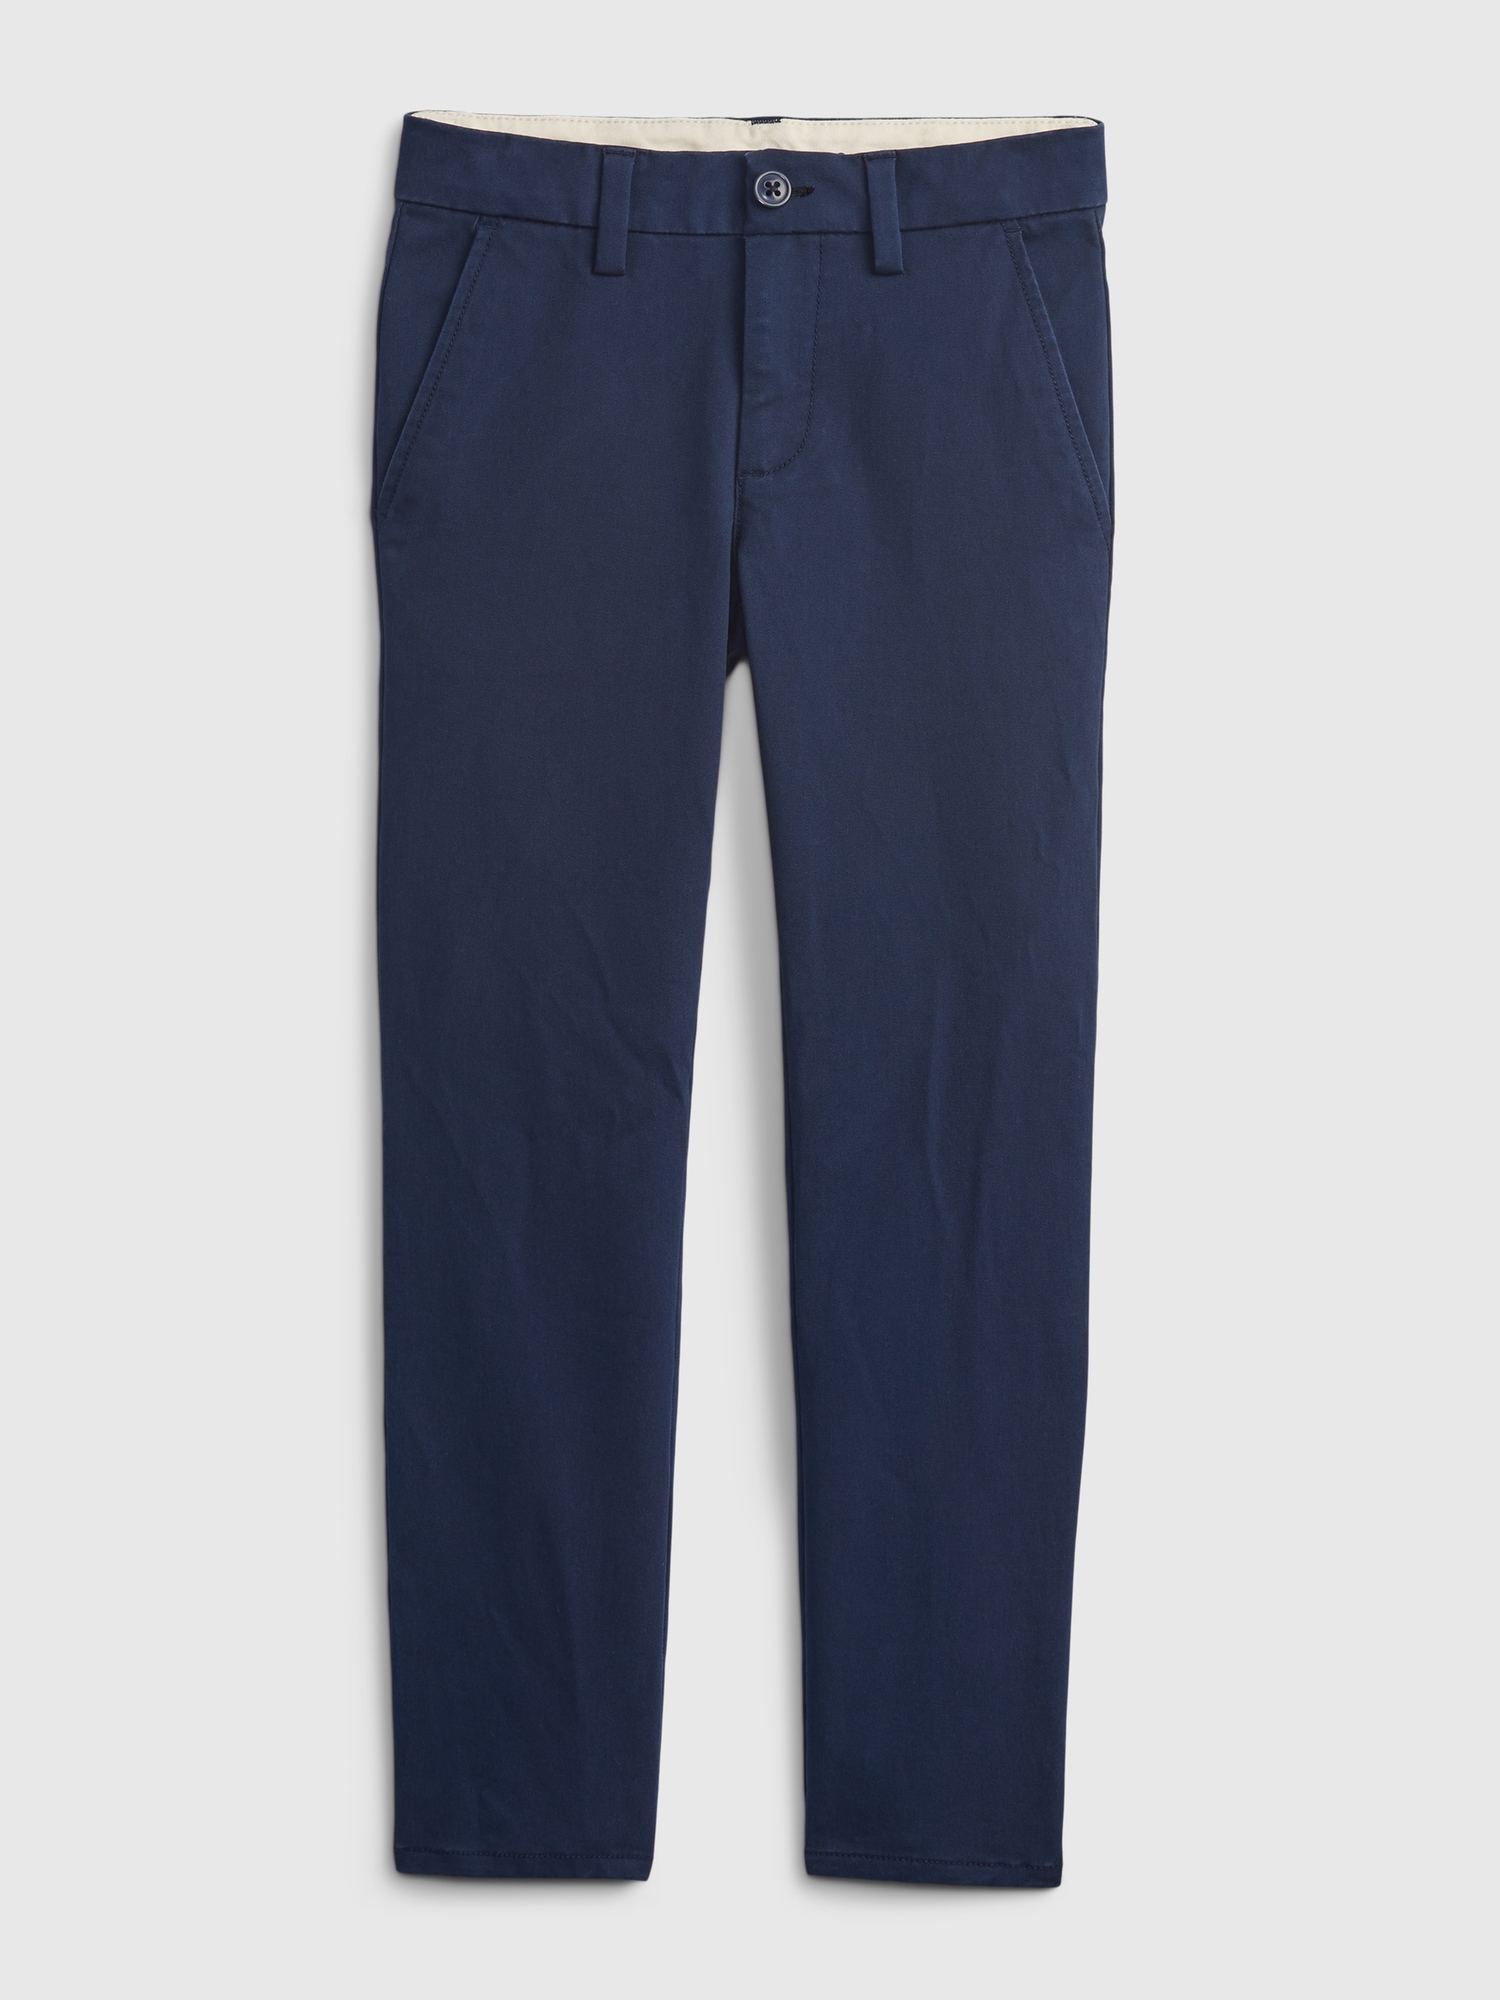 Wholesale Girls' Straight Leg Uniform Pants, Navy, 16-24 - DollarDays